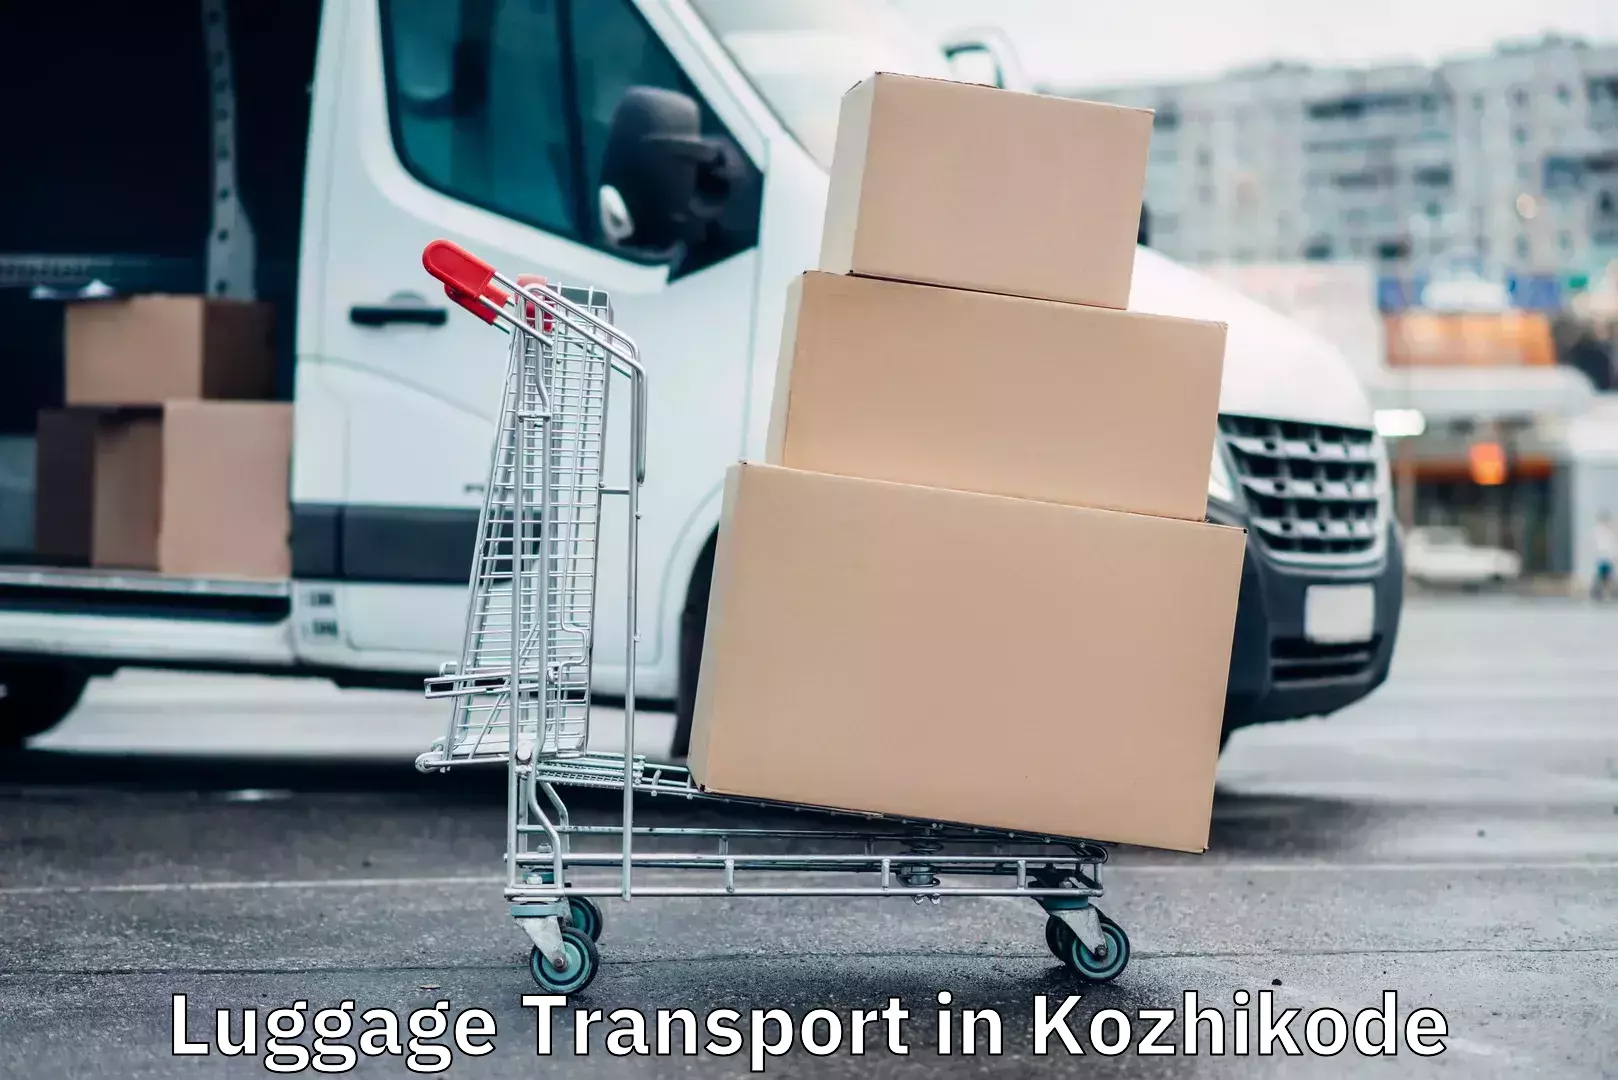 Luggage shipment tracking in Kozhikode